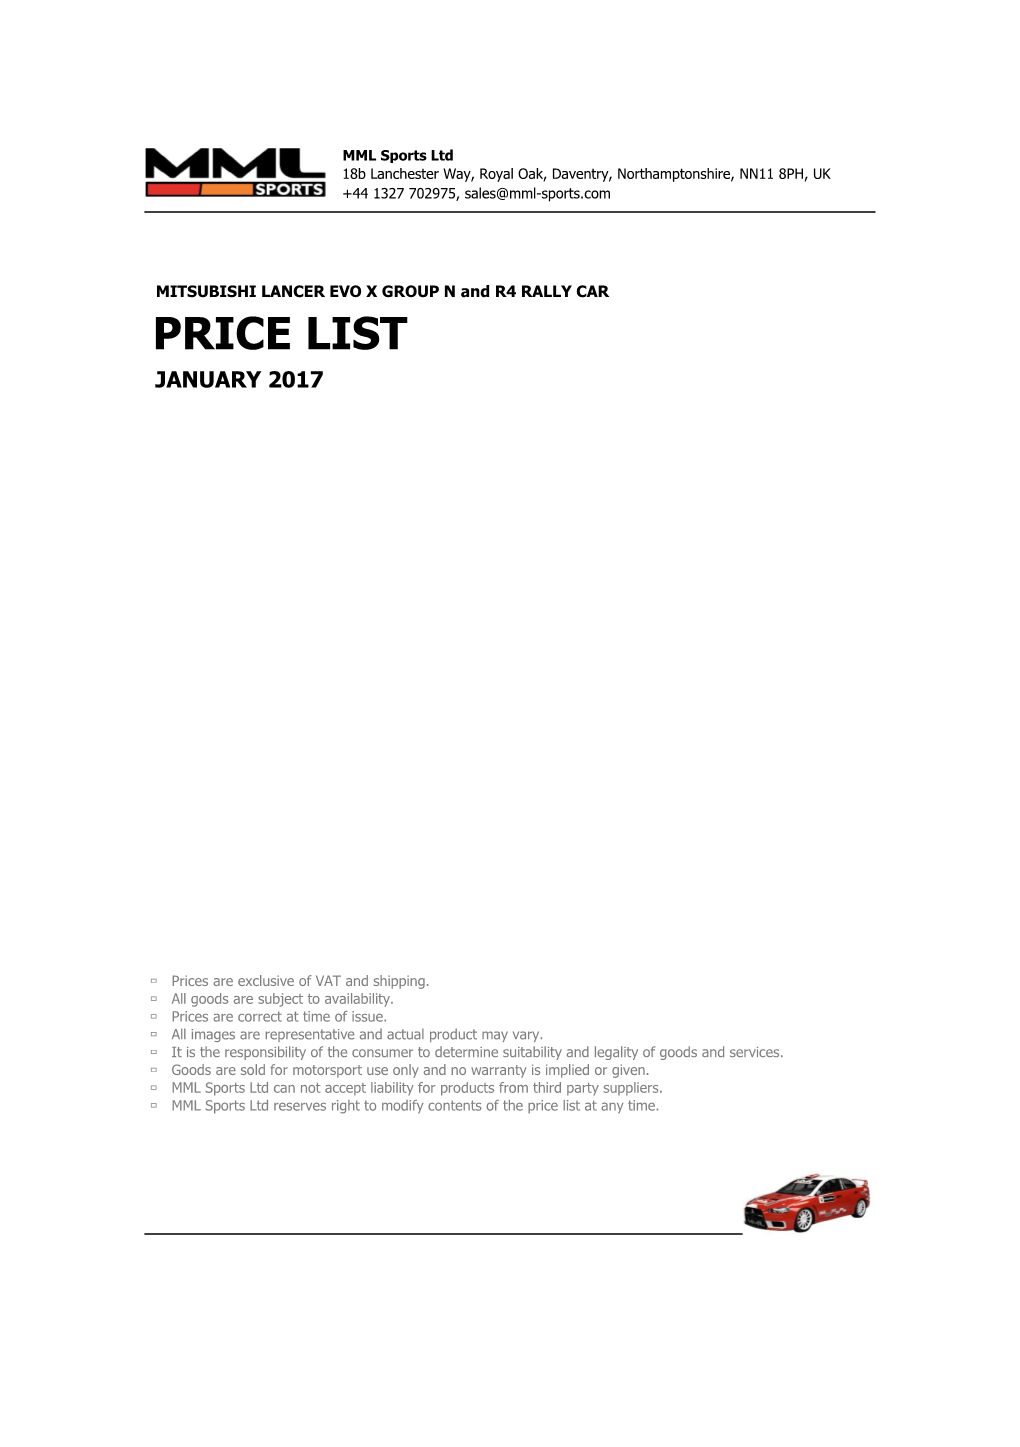 Price List January 2017